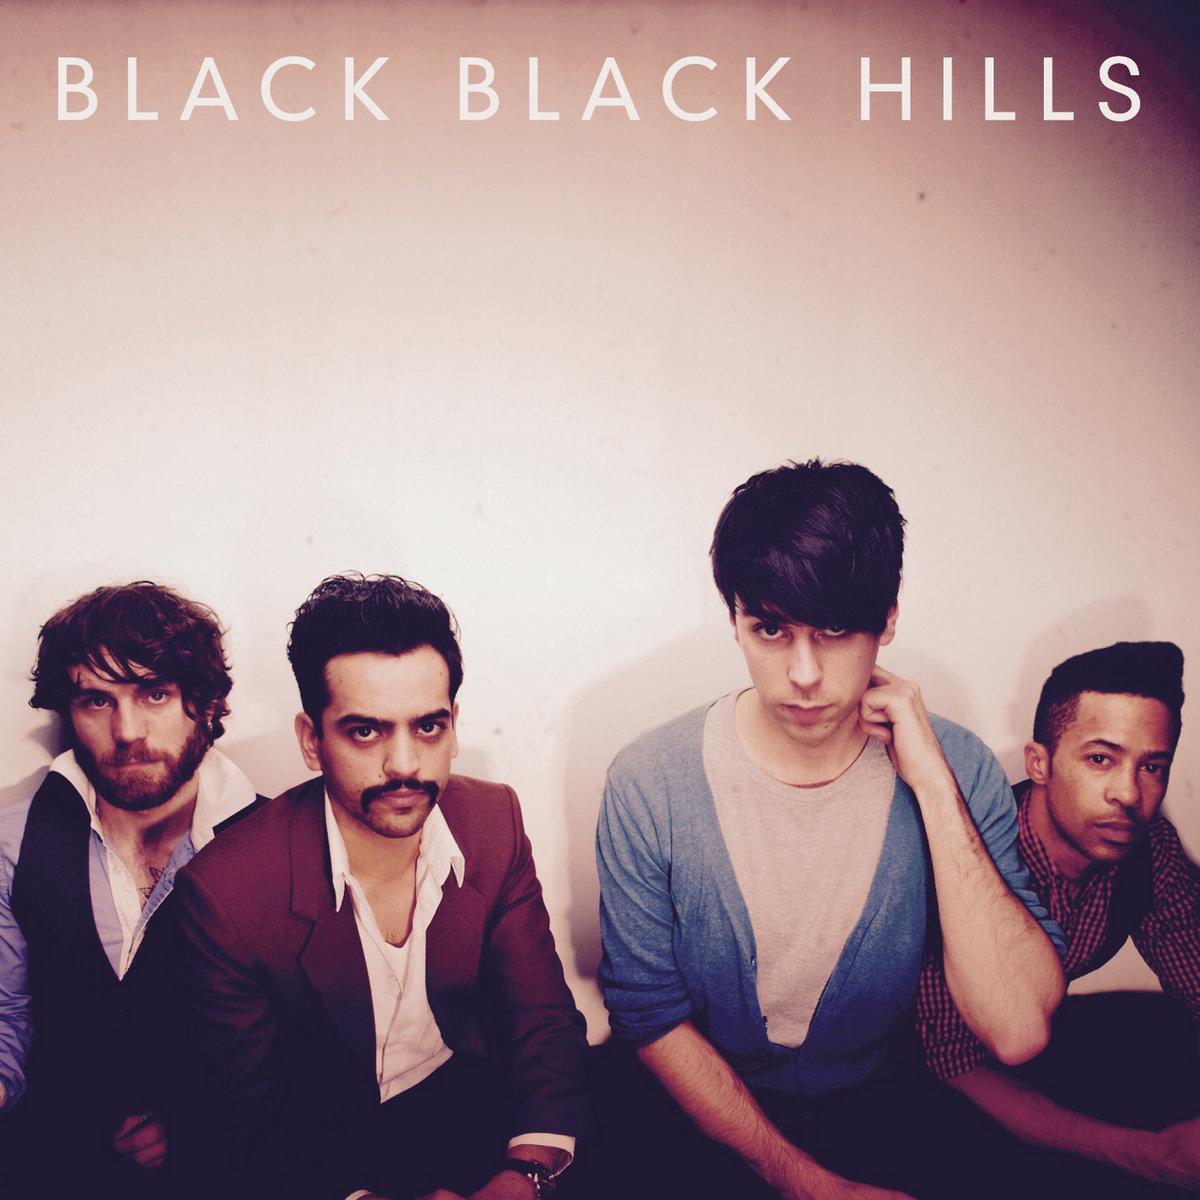 Black Black Hills